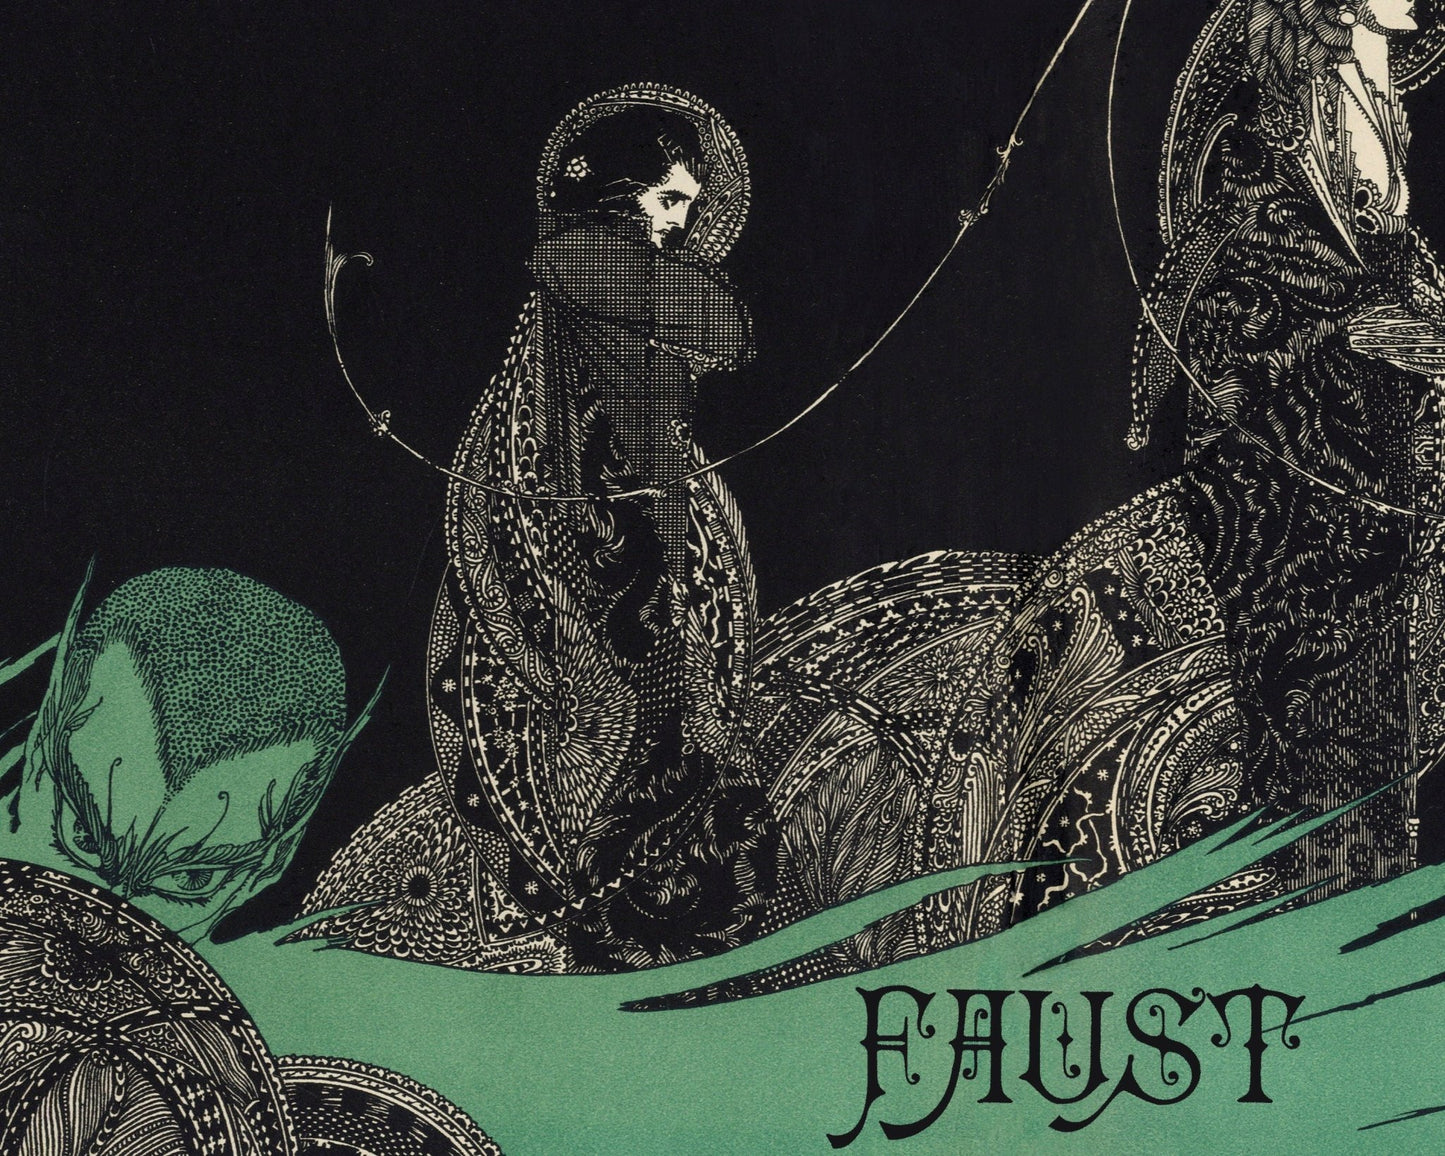 Harry Clarke "Faust" Dust Cover Illustration c.1920 - Mabon Gallery